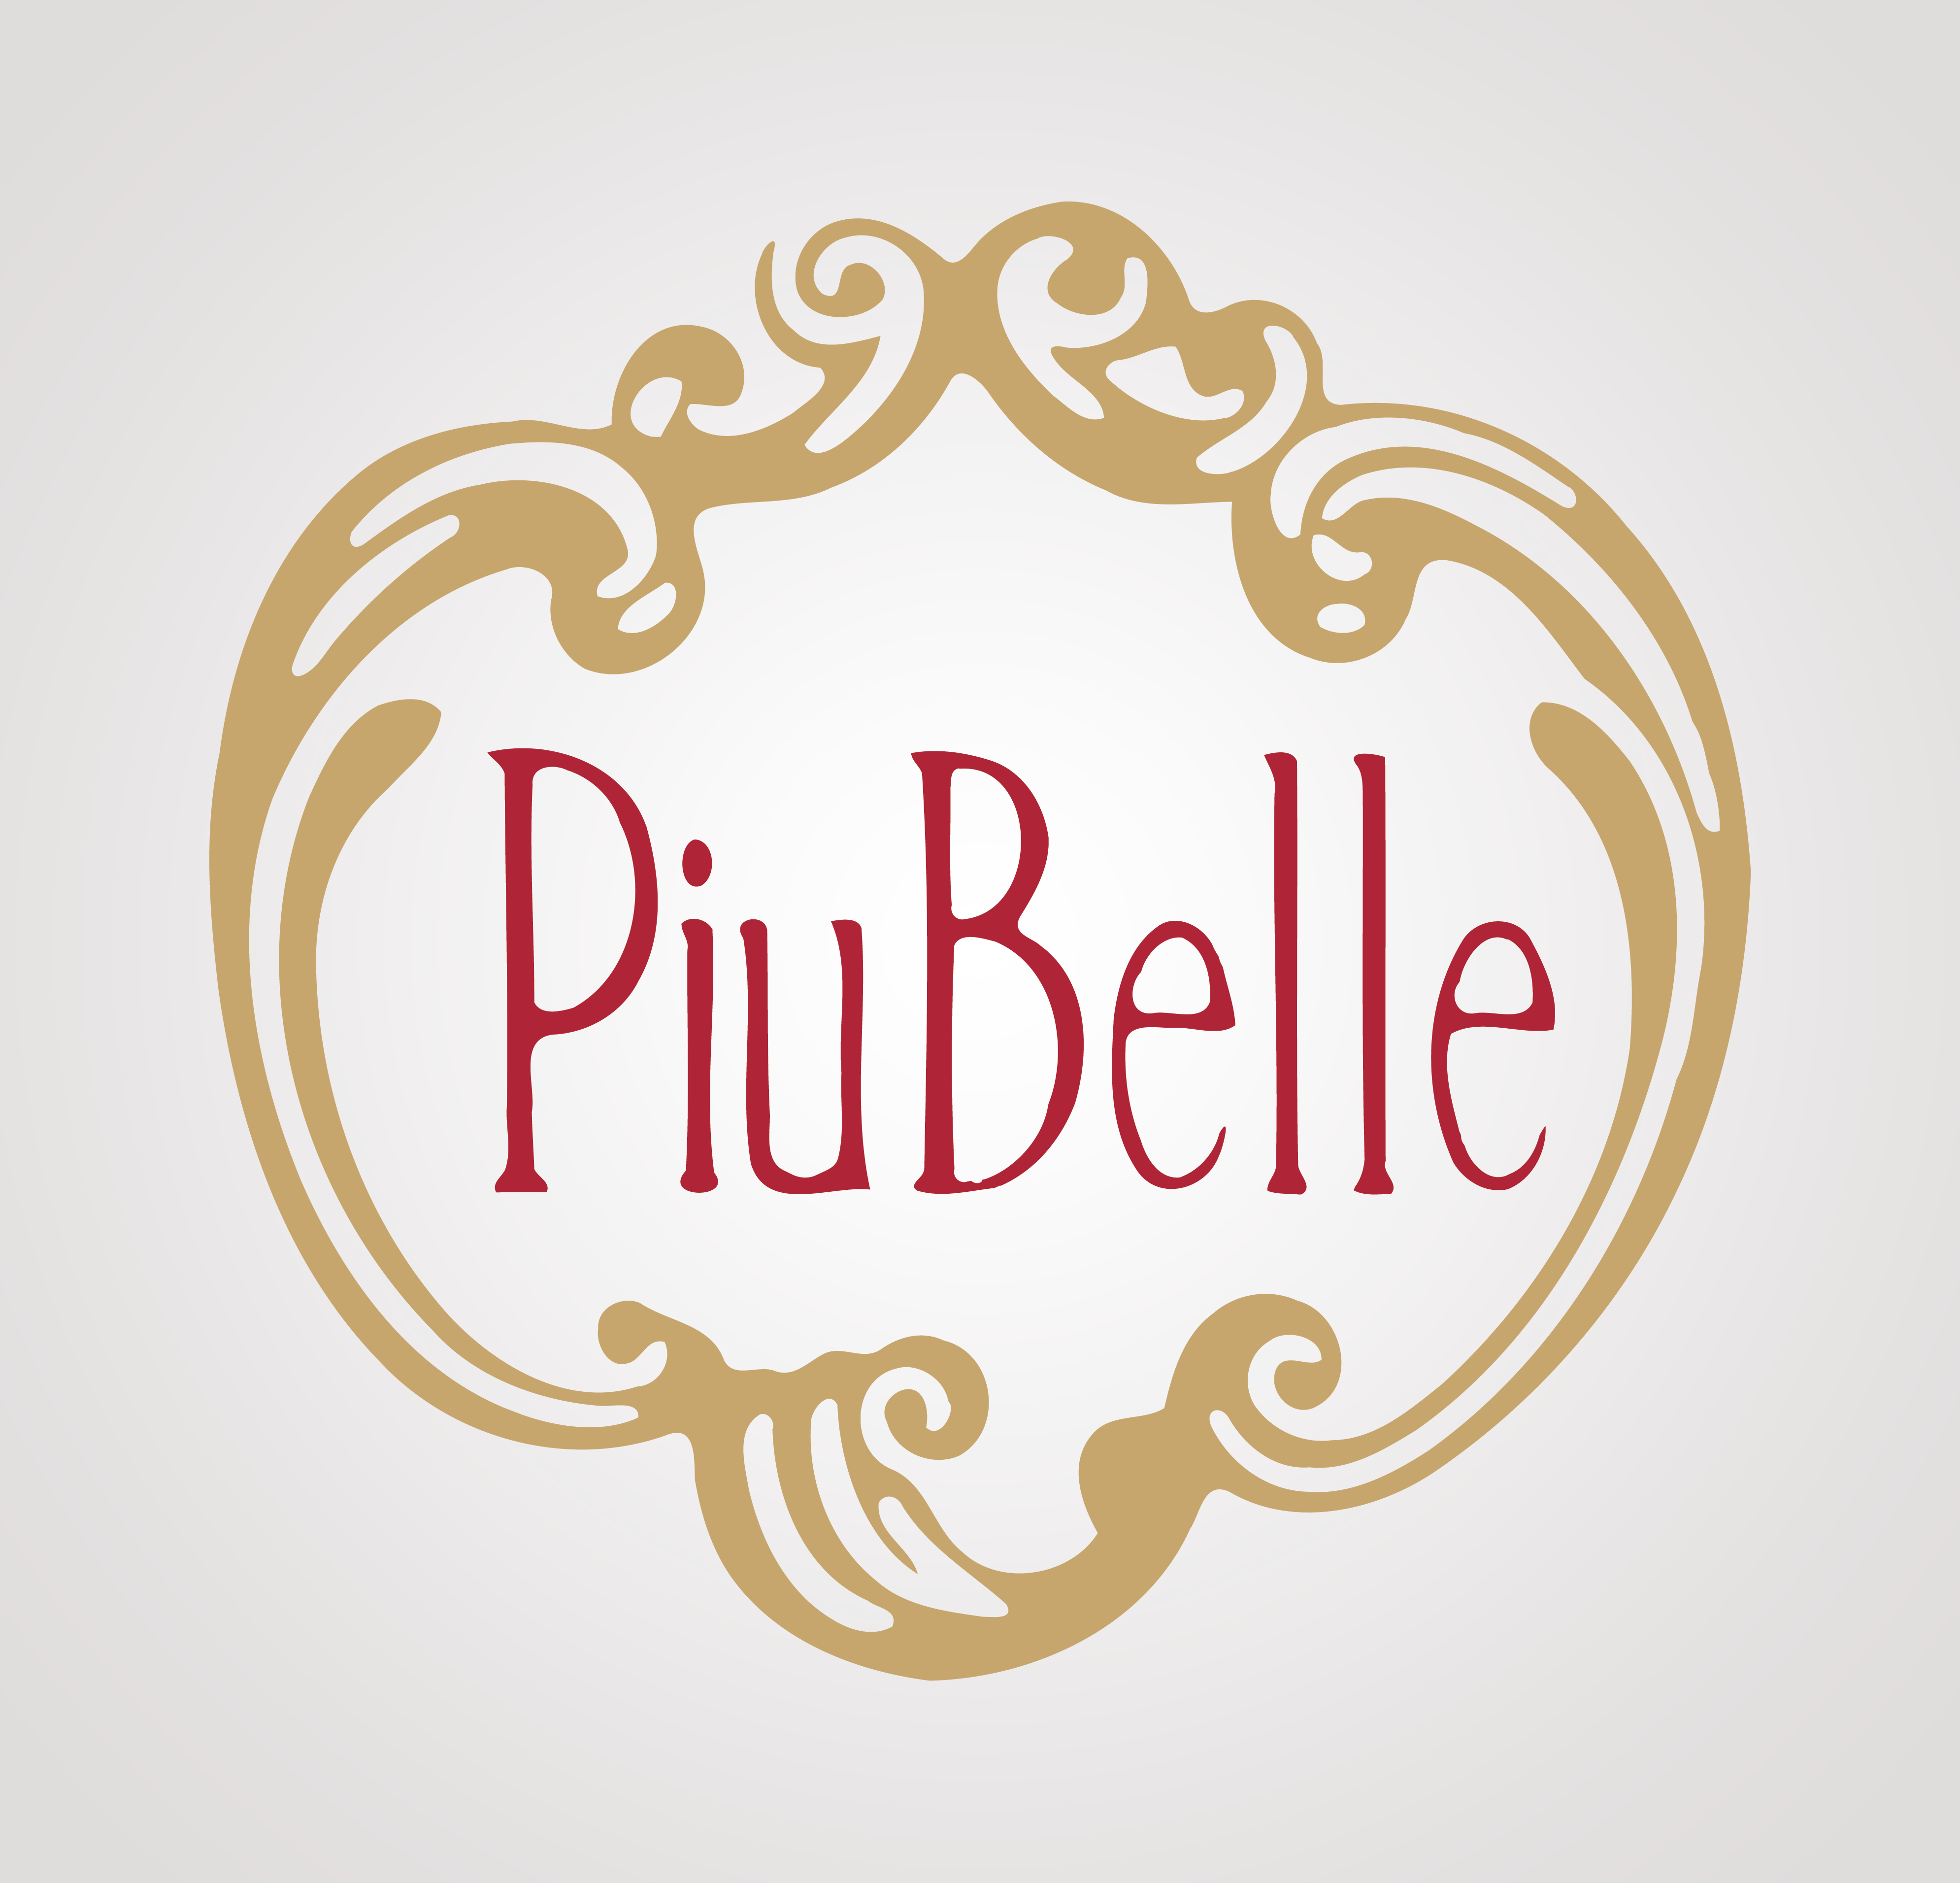 Piubelle Logo